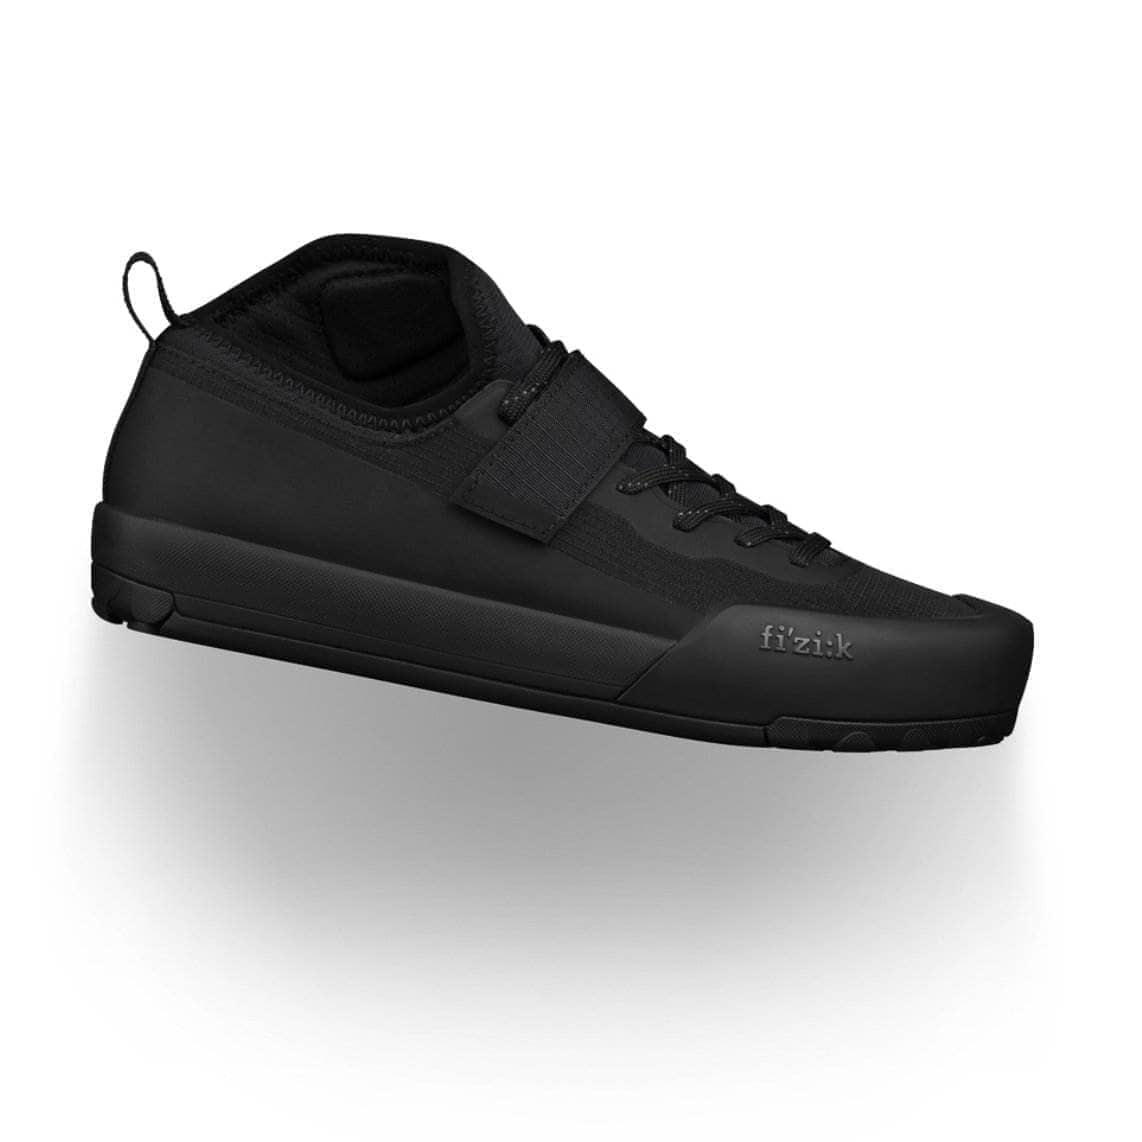 fizik Gravita Tensor Shoe Black/Black / 36 Apparel - Apparel Accessories - Shoes - Mountain - Clip-in